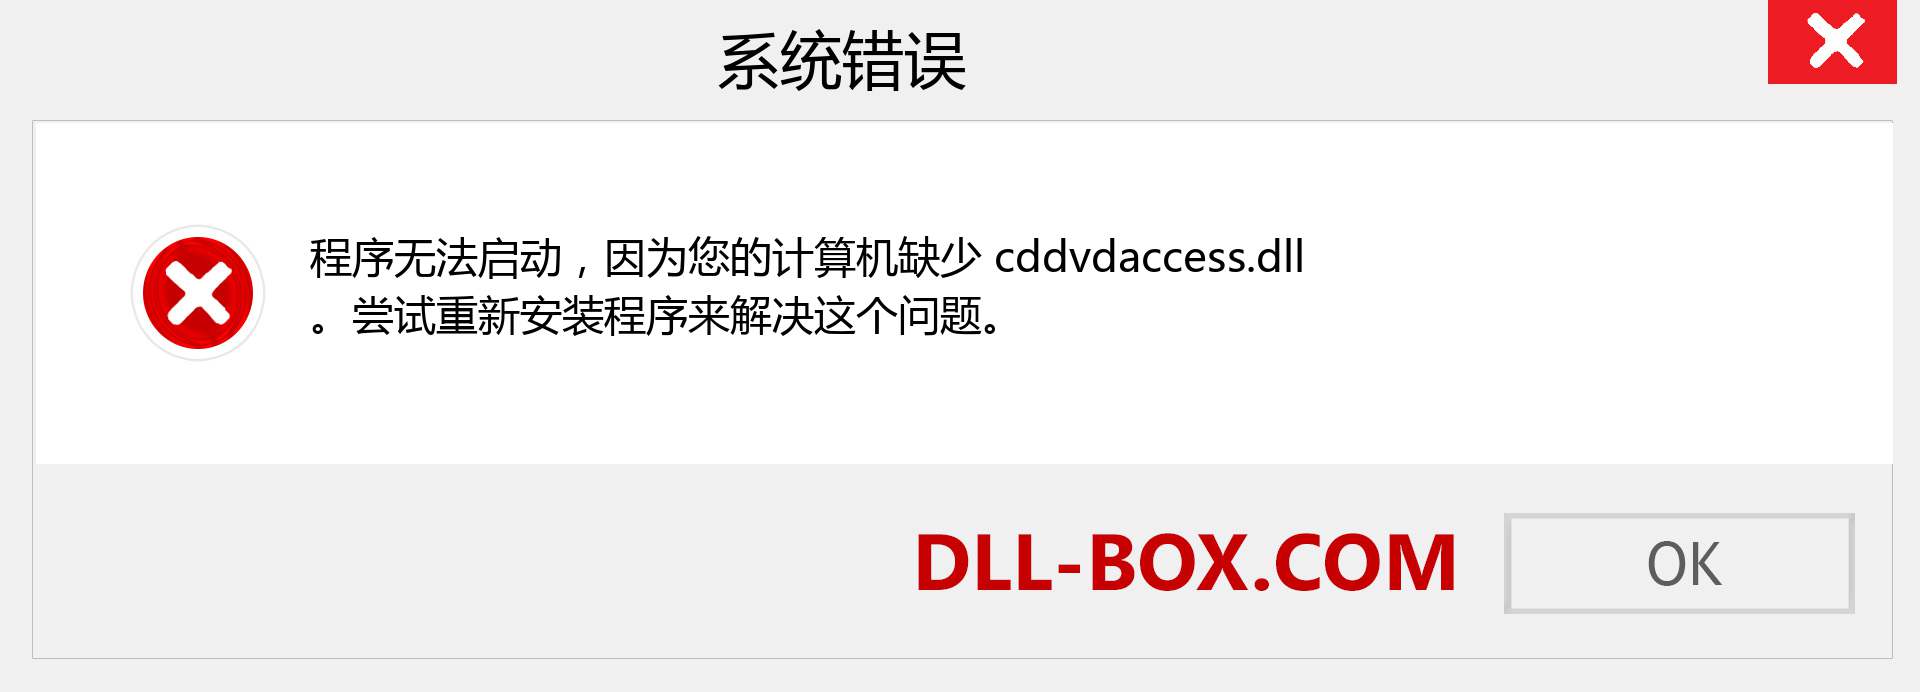 cddvdaccess.dll 文件丢失？。 适用于 Windows 7、8、10 的下载 - 修复 Windows、照片、图像上的 cddvdaccess dll 丢失错误